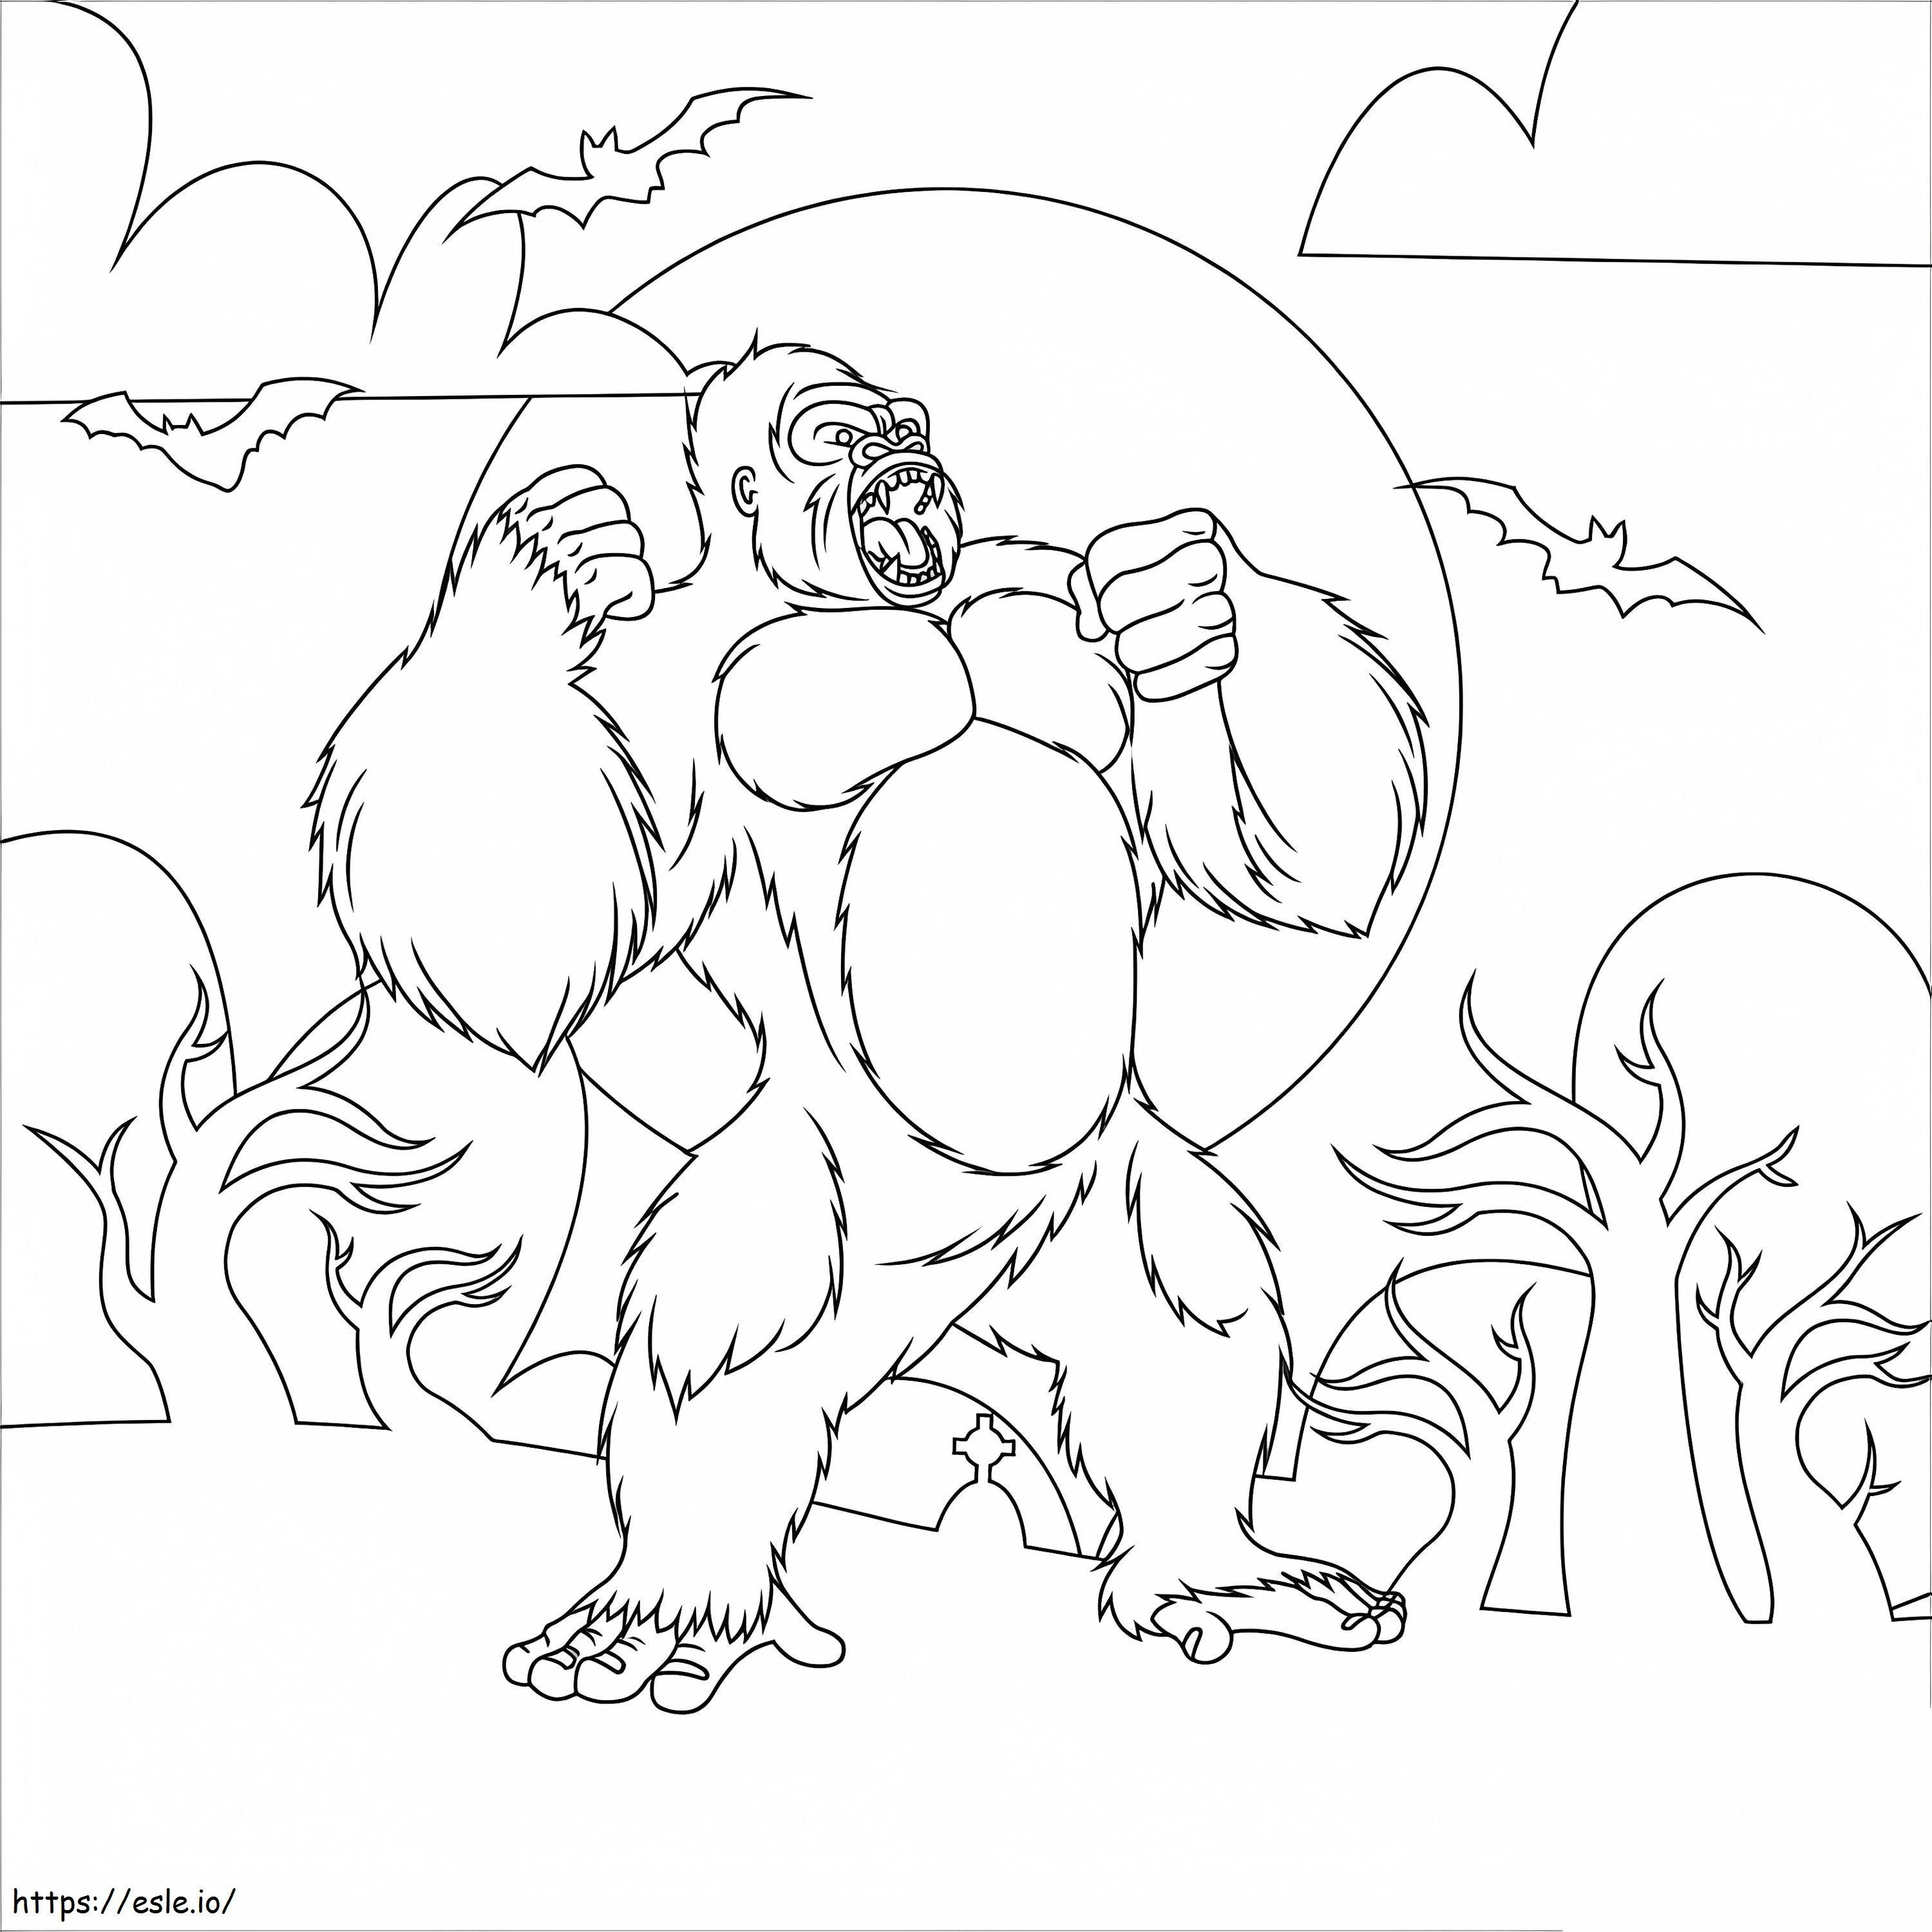 King Kong arrabbiato 1 da colorare